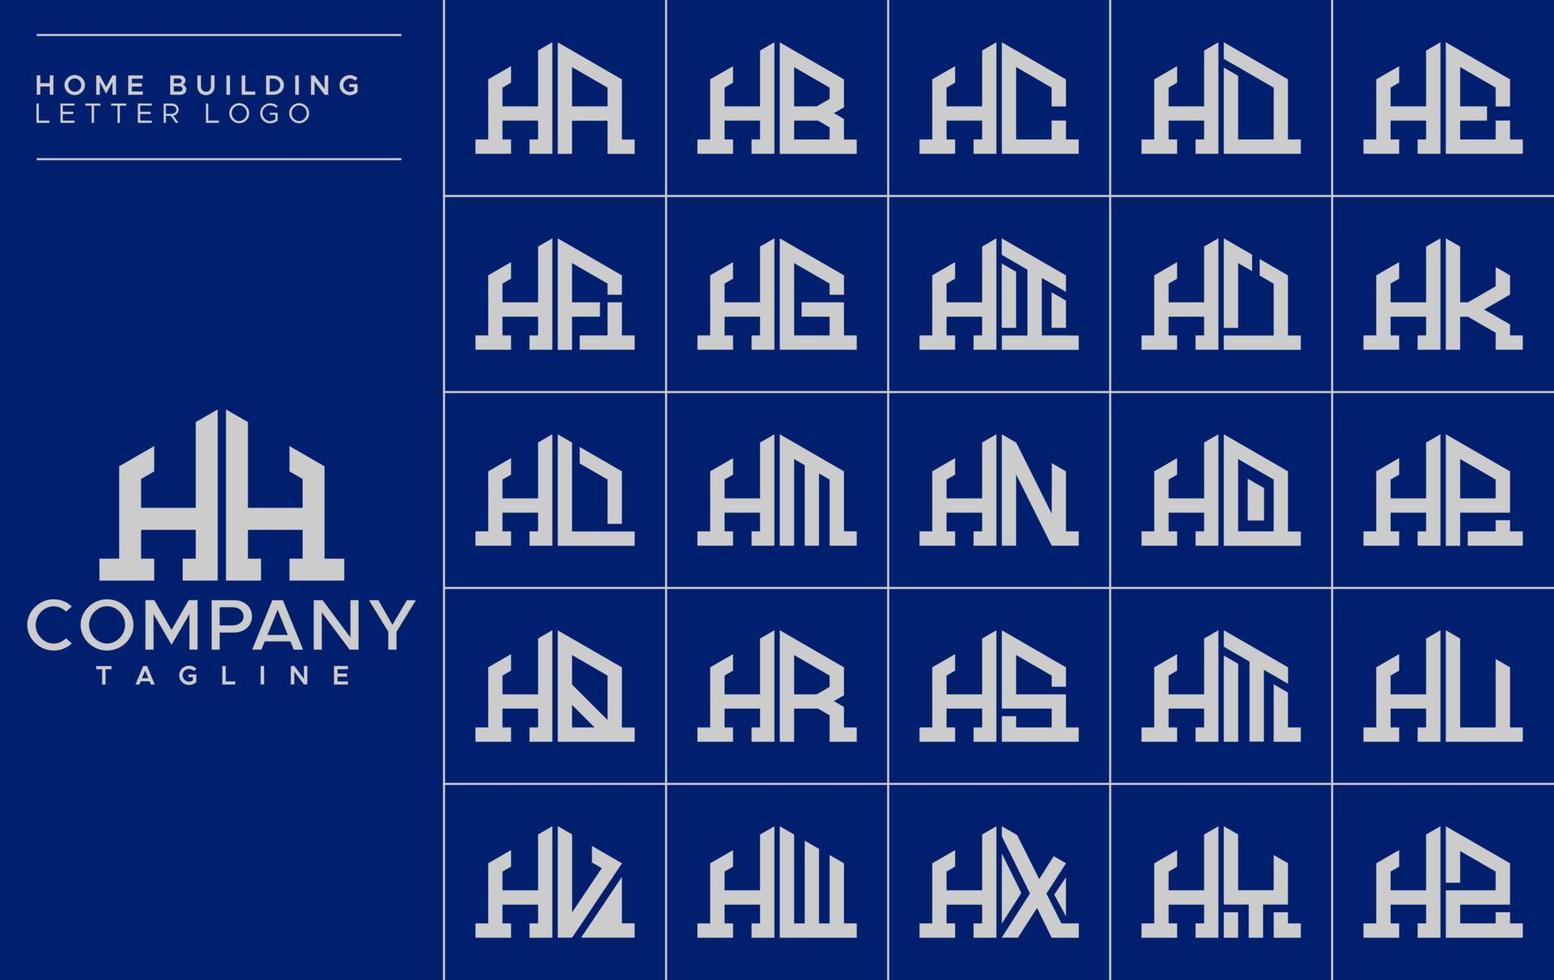 Minimalist home letter H logo design template set. House HH H letter logo vector collection.